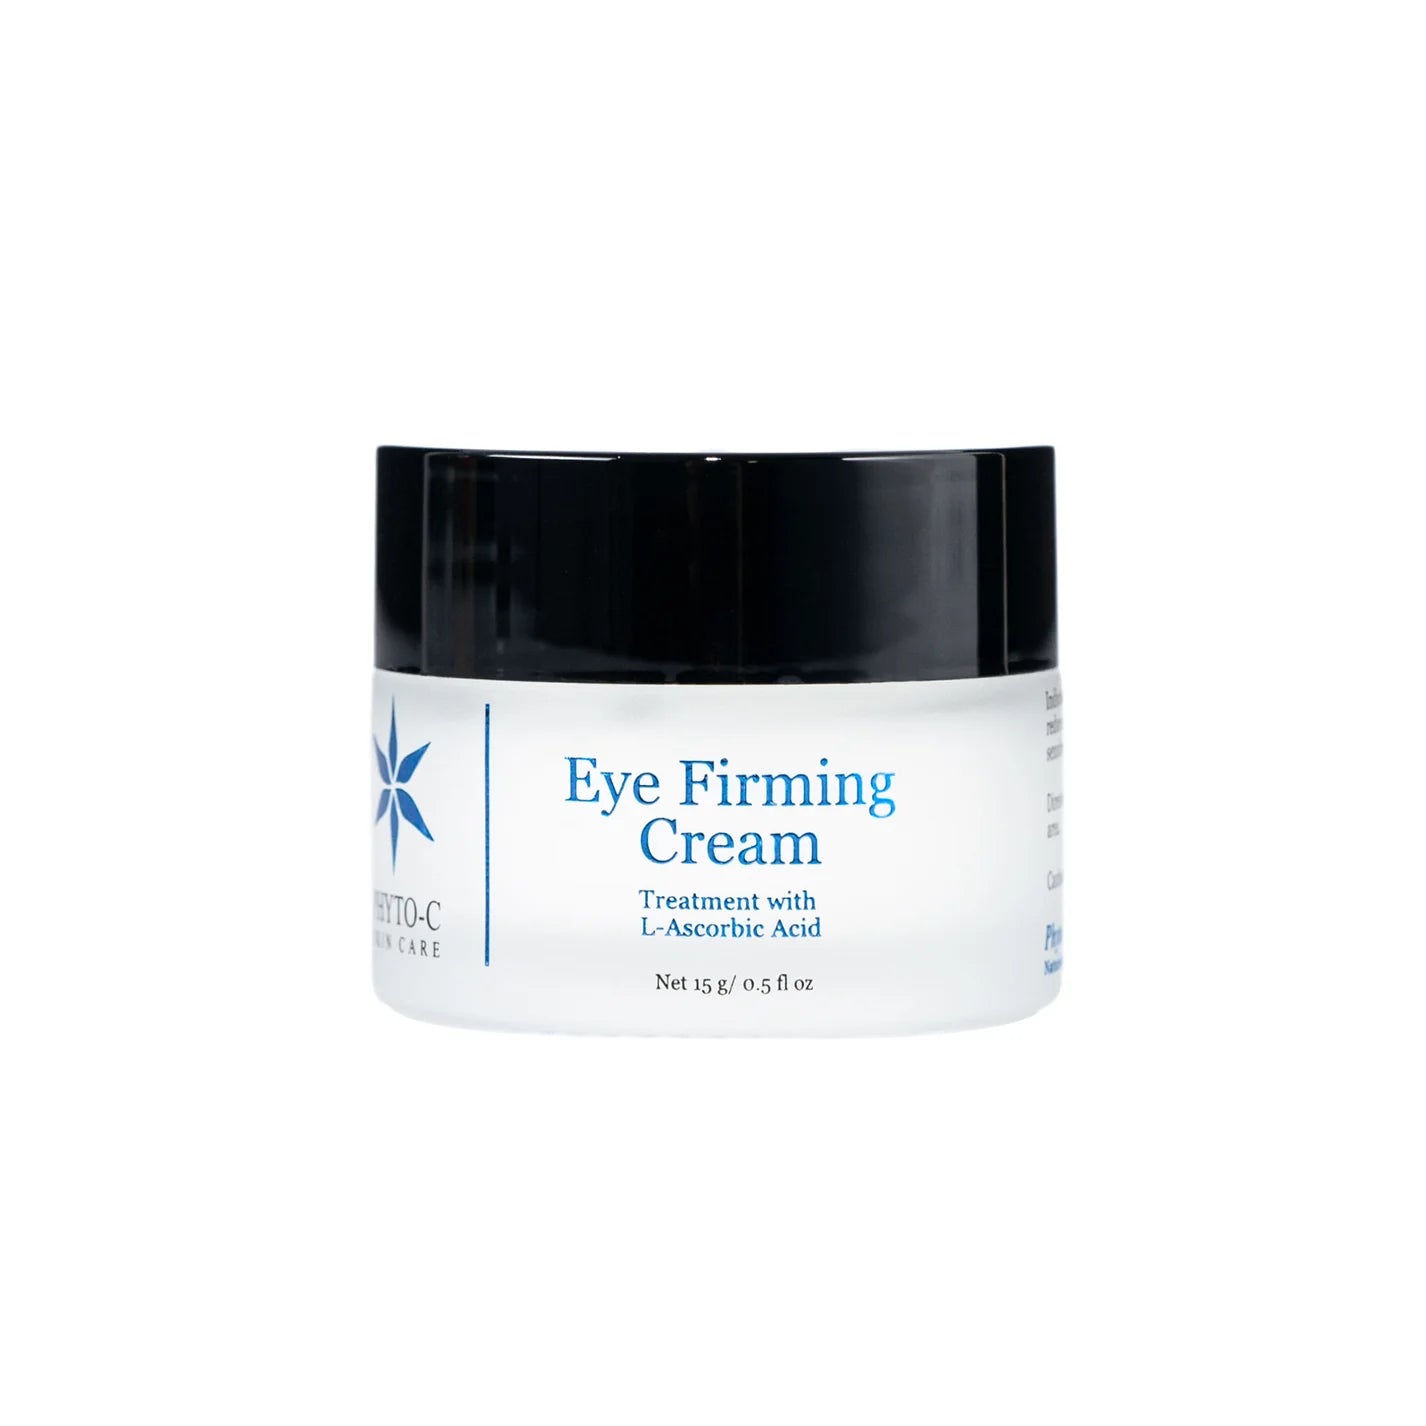 PHYTO-C Vitamin C Firming Antioxidant Eye Cream｜Eye Firming Cream 15ml